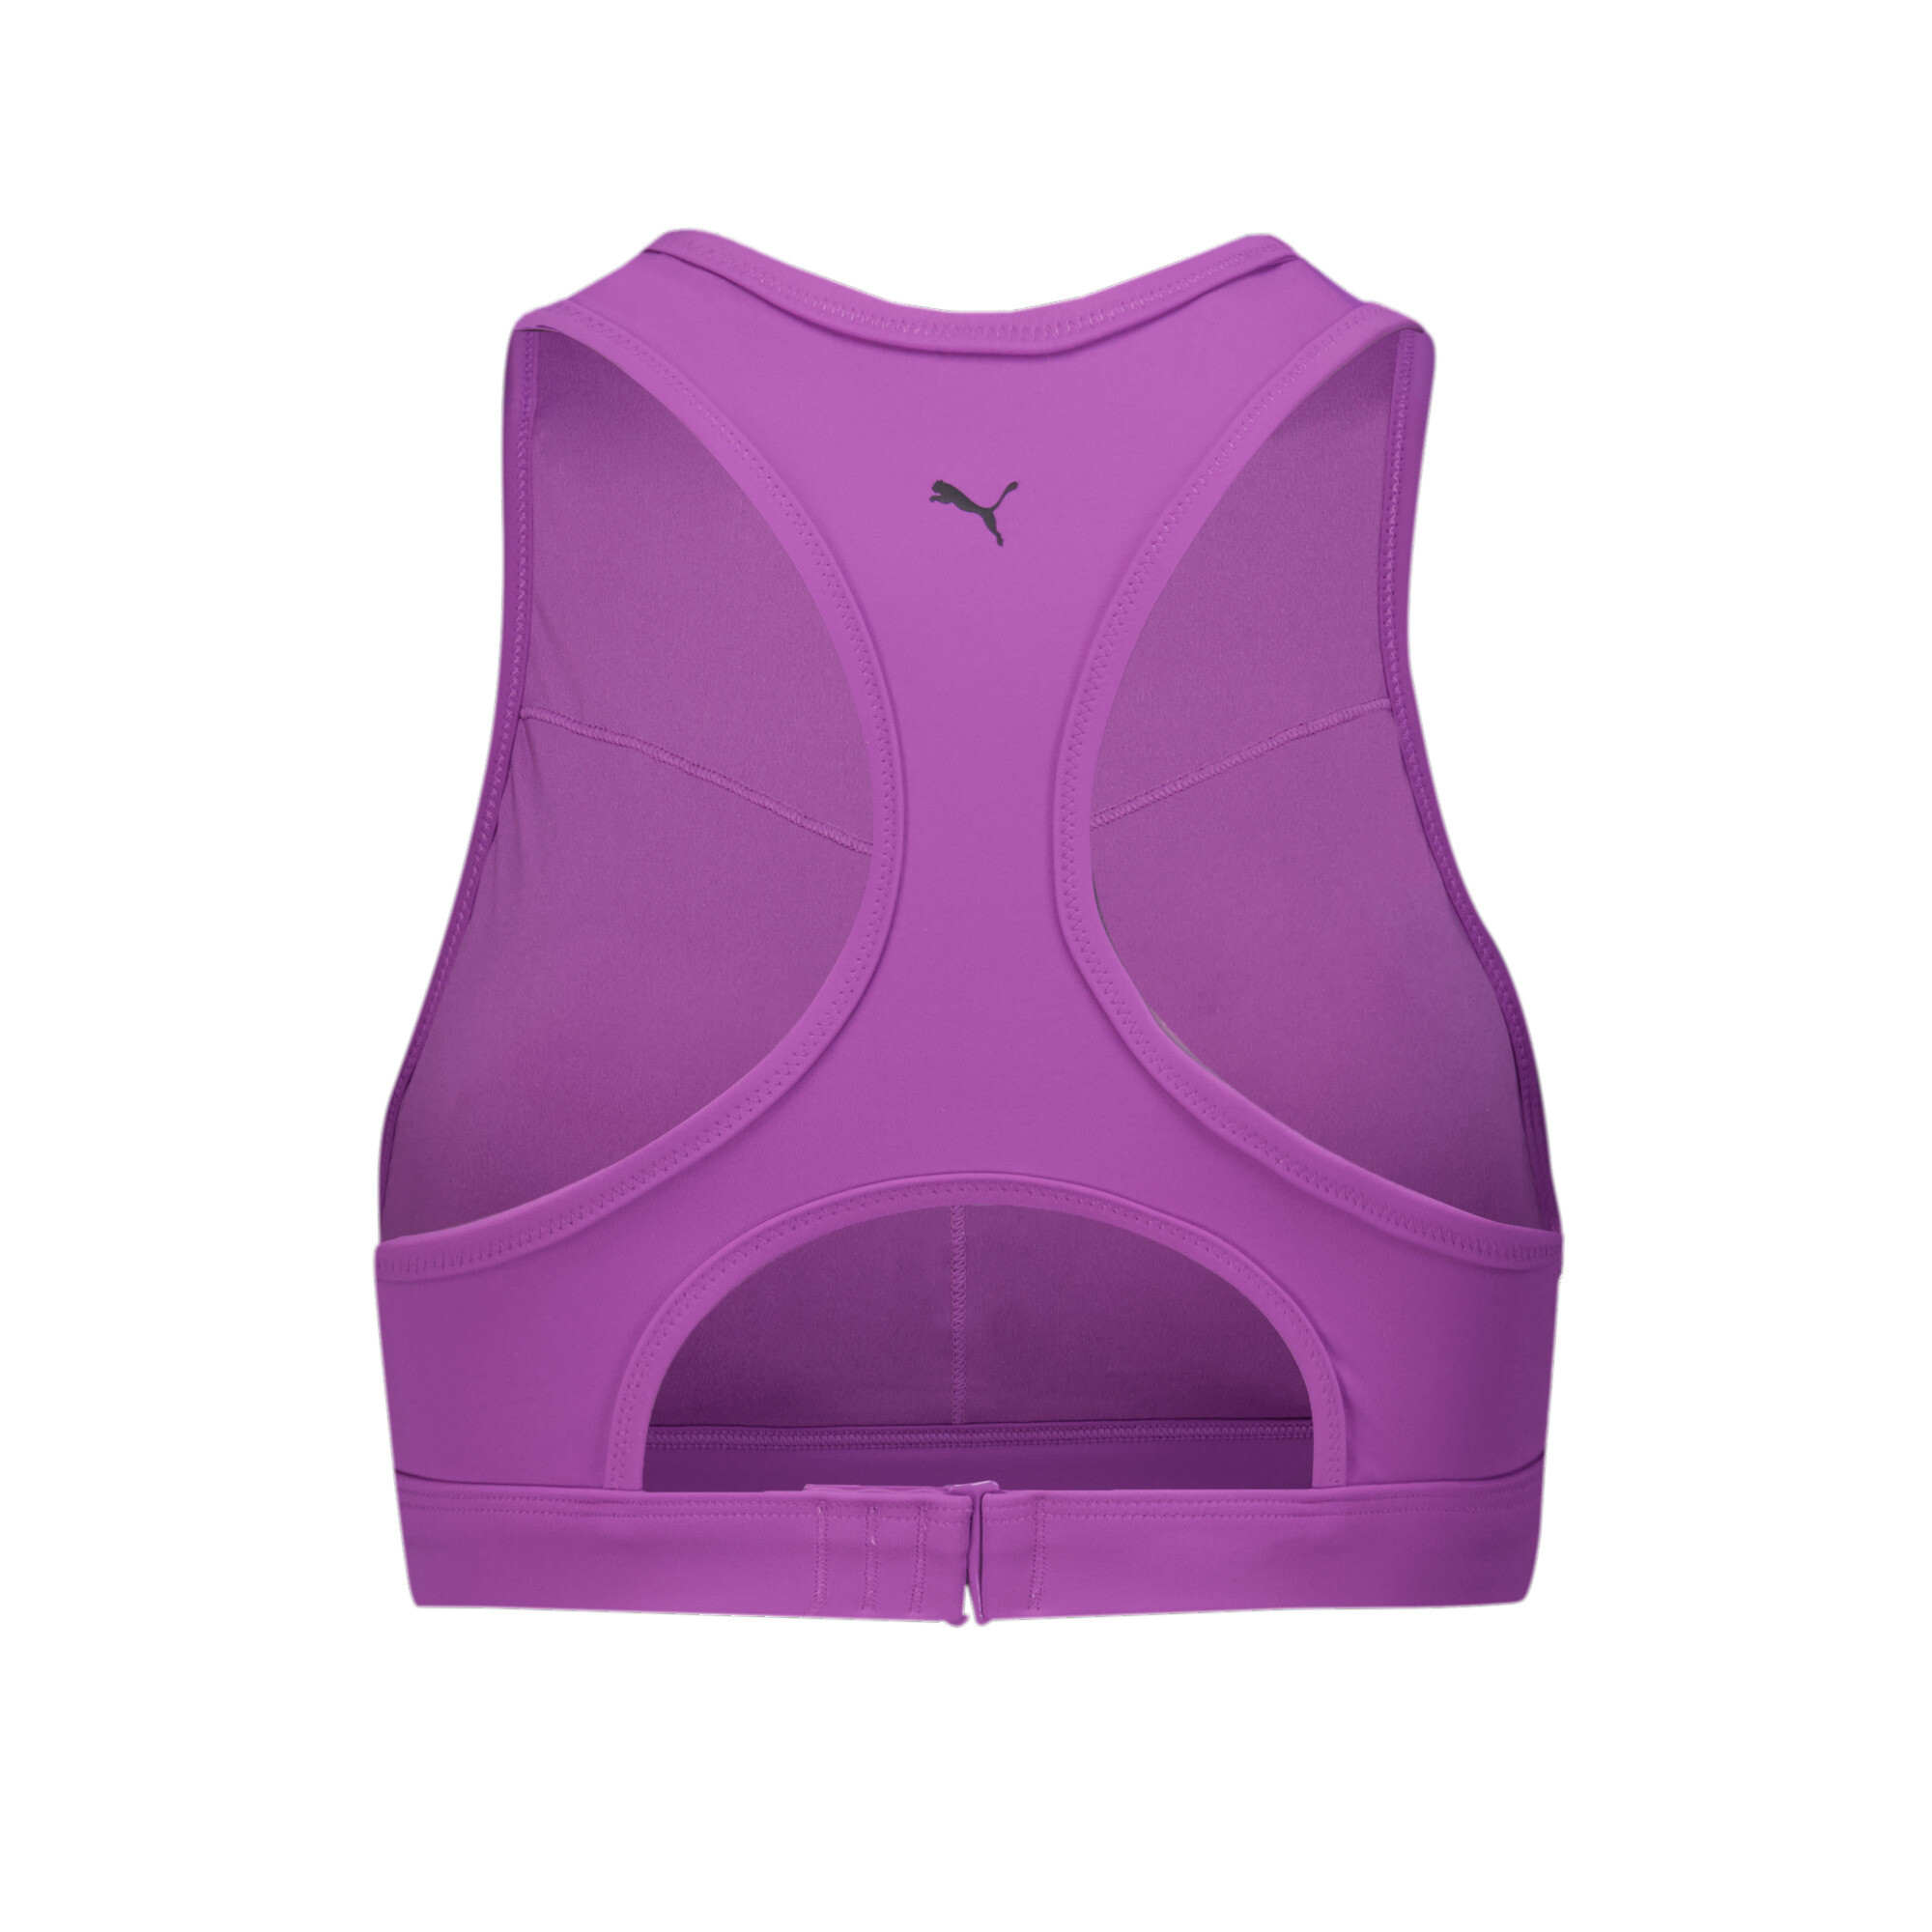 Women's Puma Swim's Racerback Top, Purple, Size L, Sport